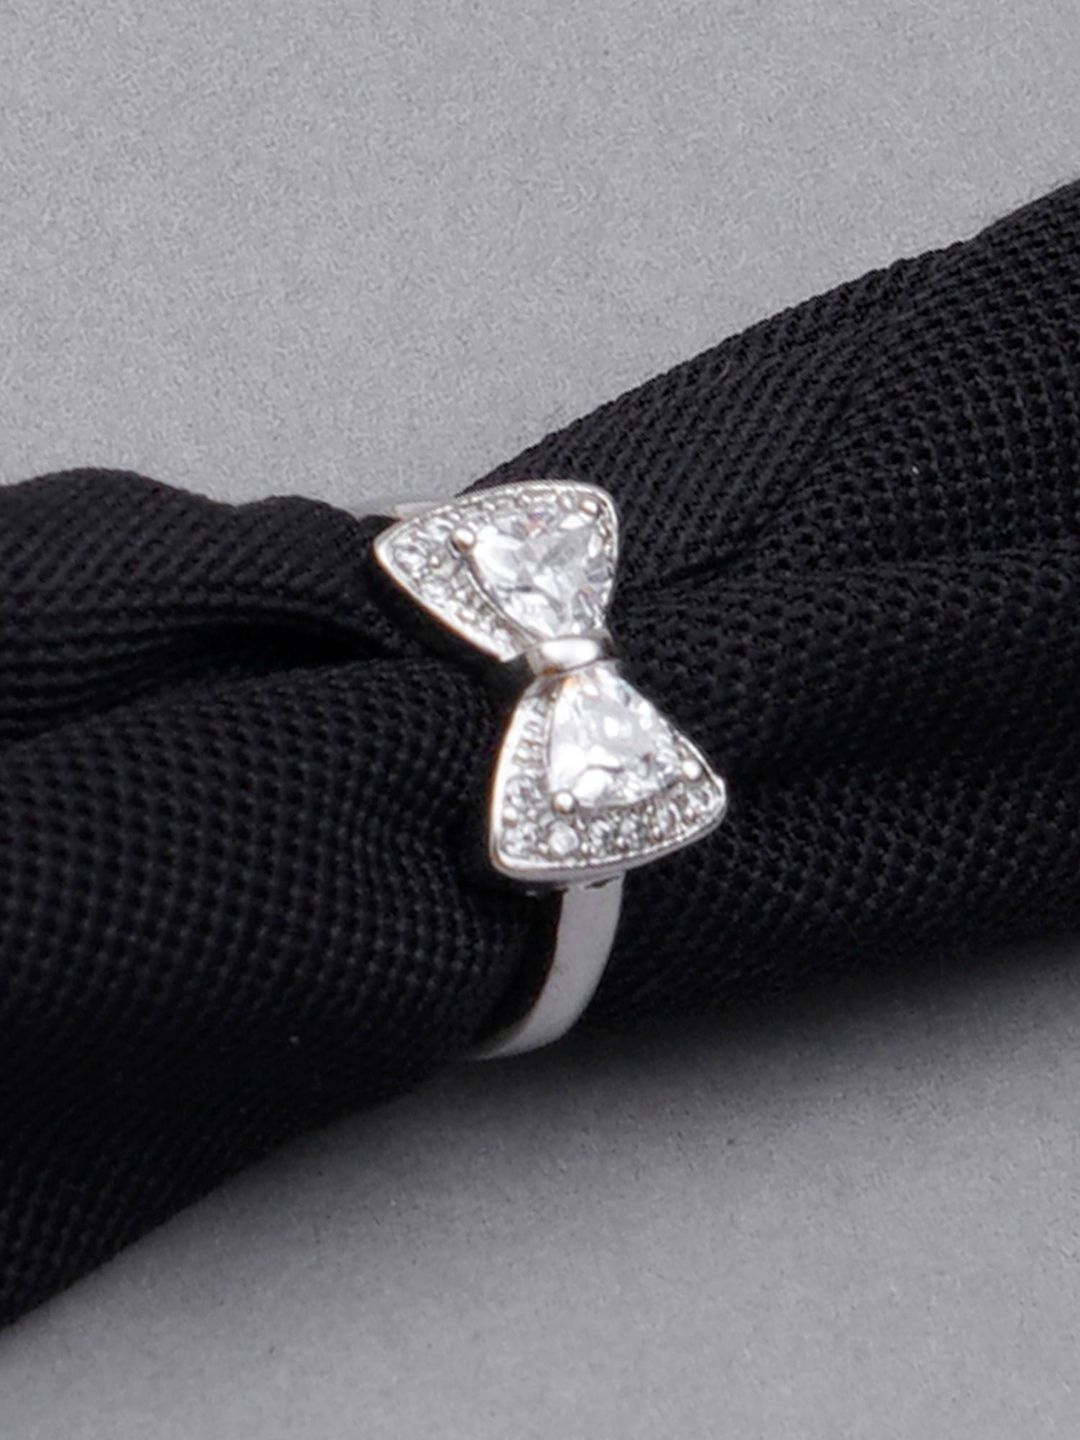 KARATCART Woman Silver Bow Cut Elegant Austrian Crystal Adjustable Ring Price in India